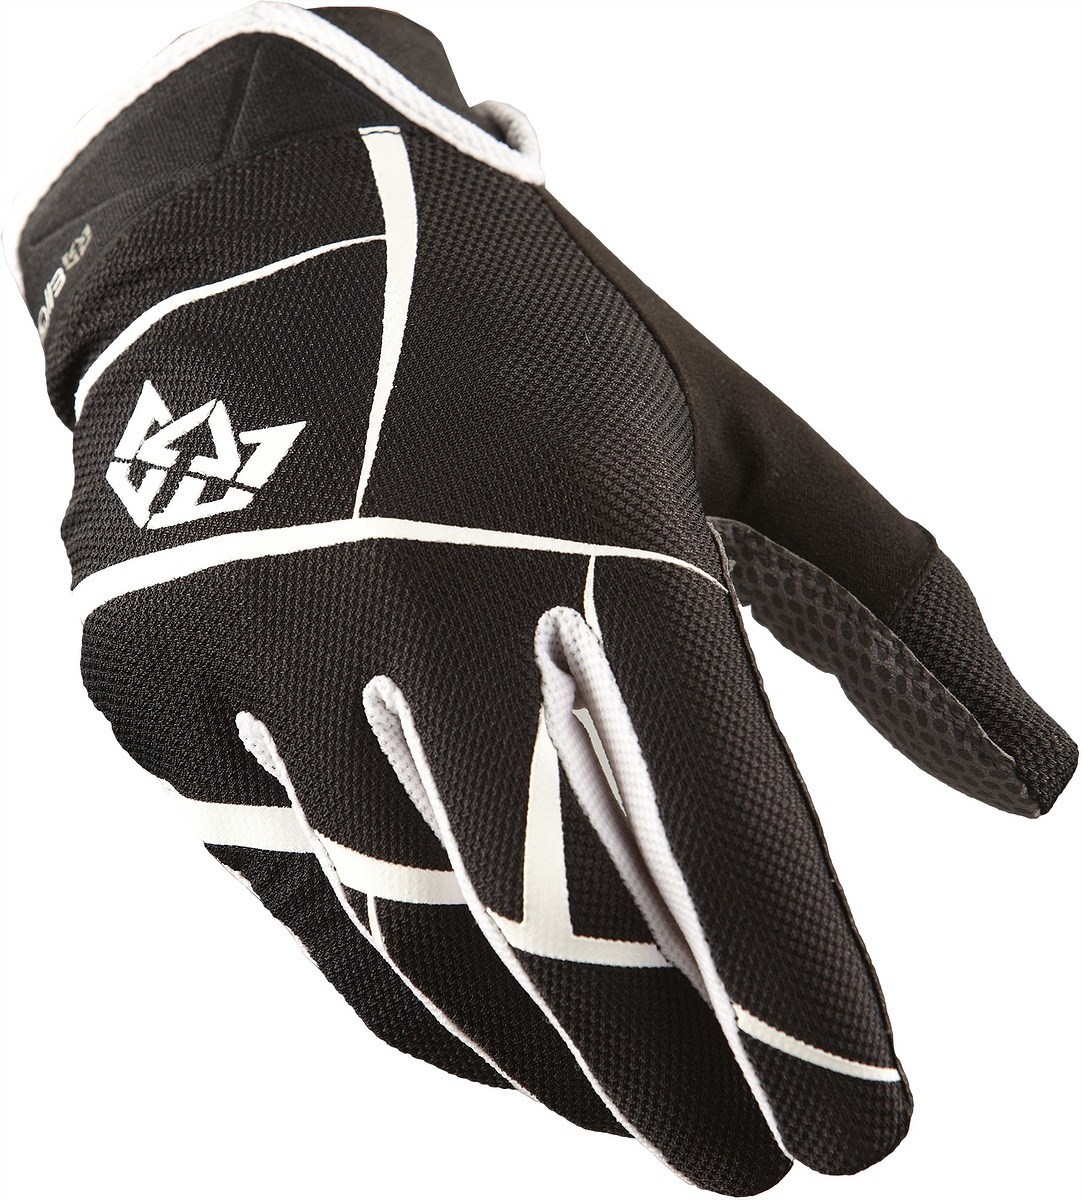 Royal Racing Signature Glove product image